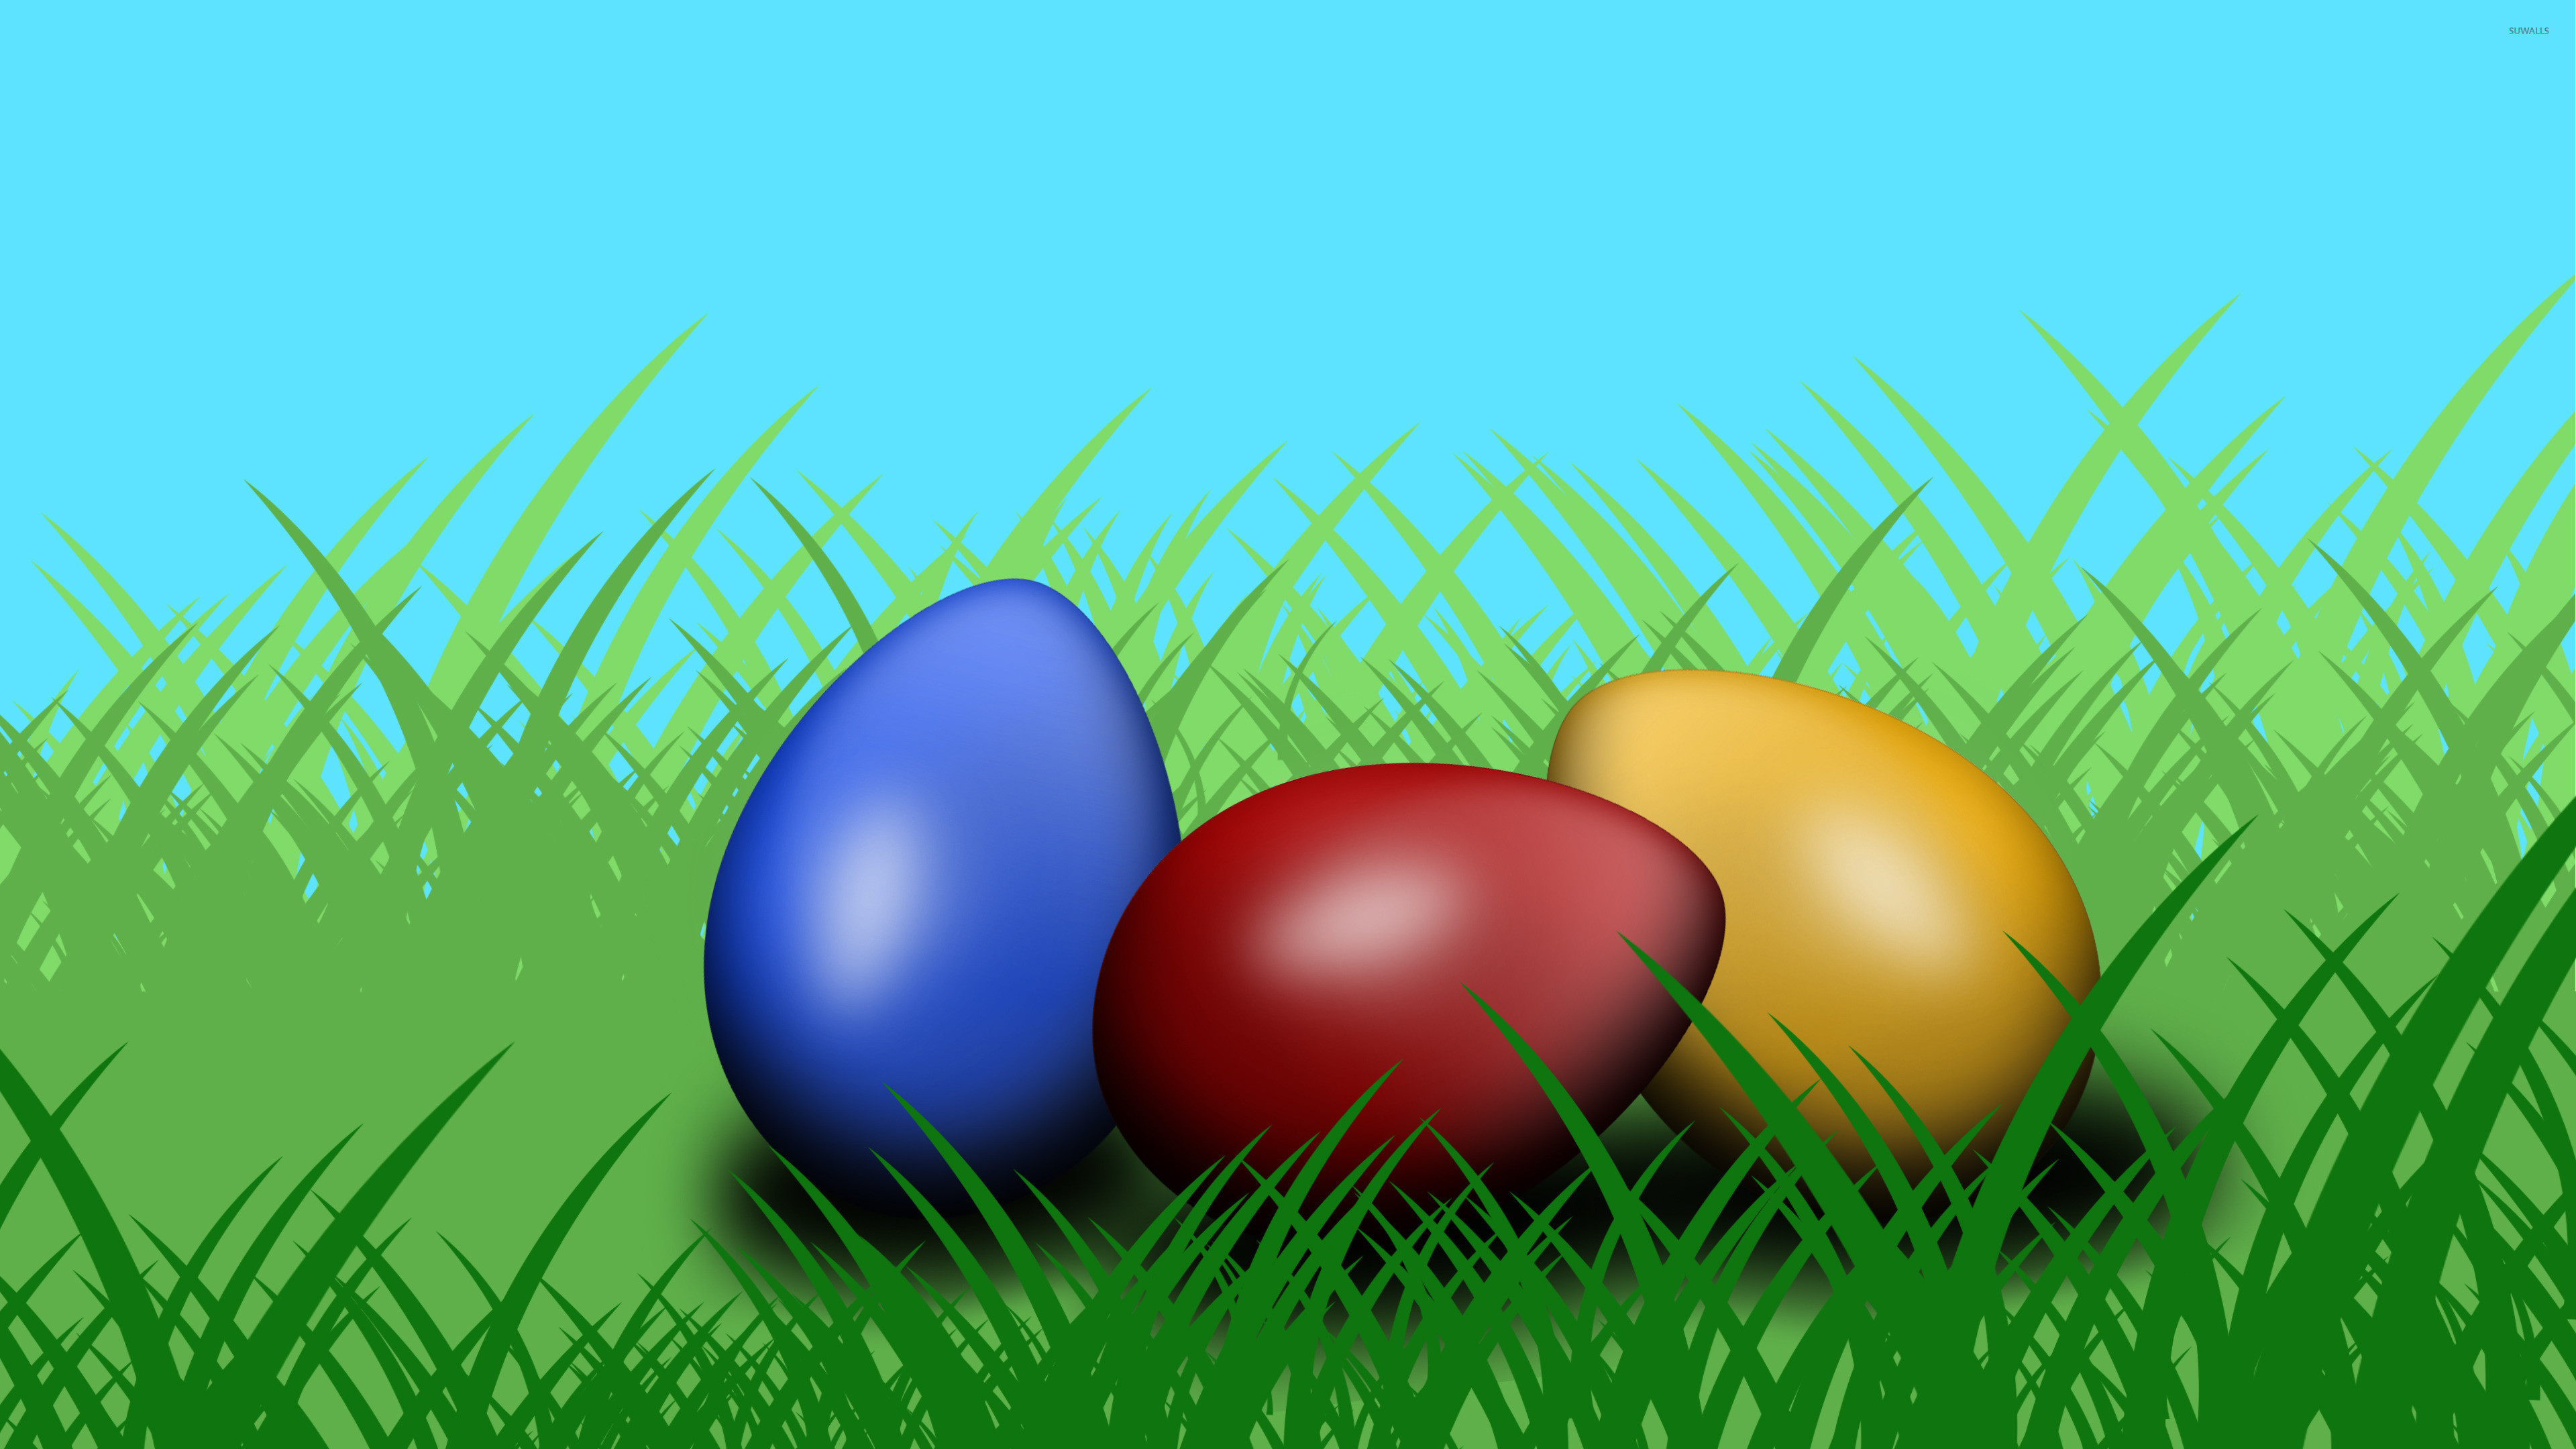 3840x2160 Easter egg in the grass wallpaper